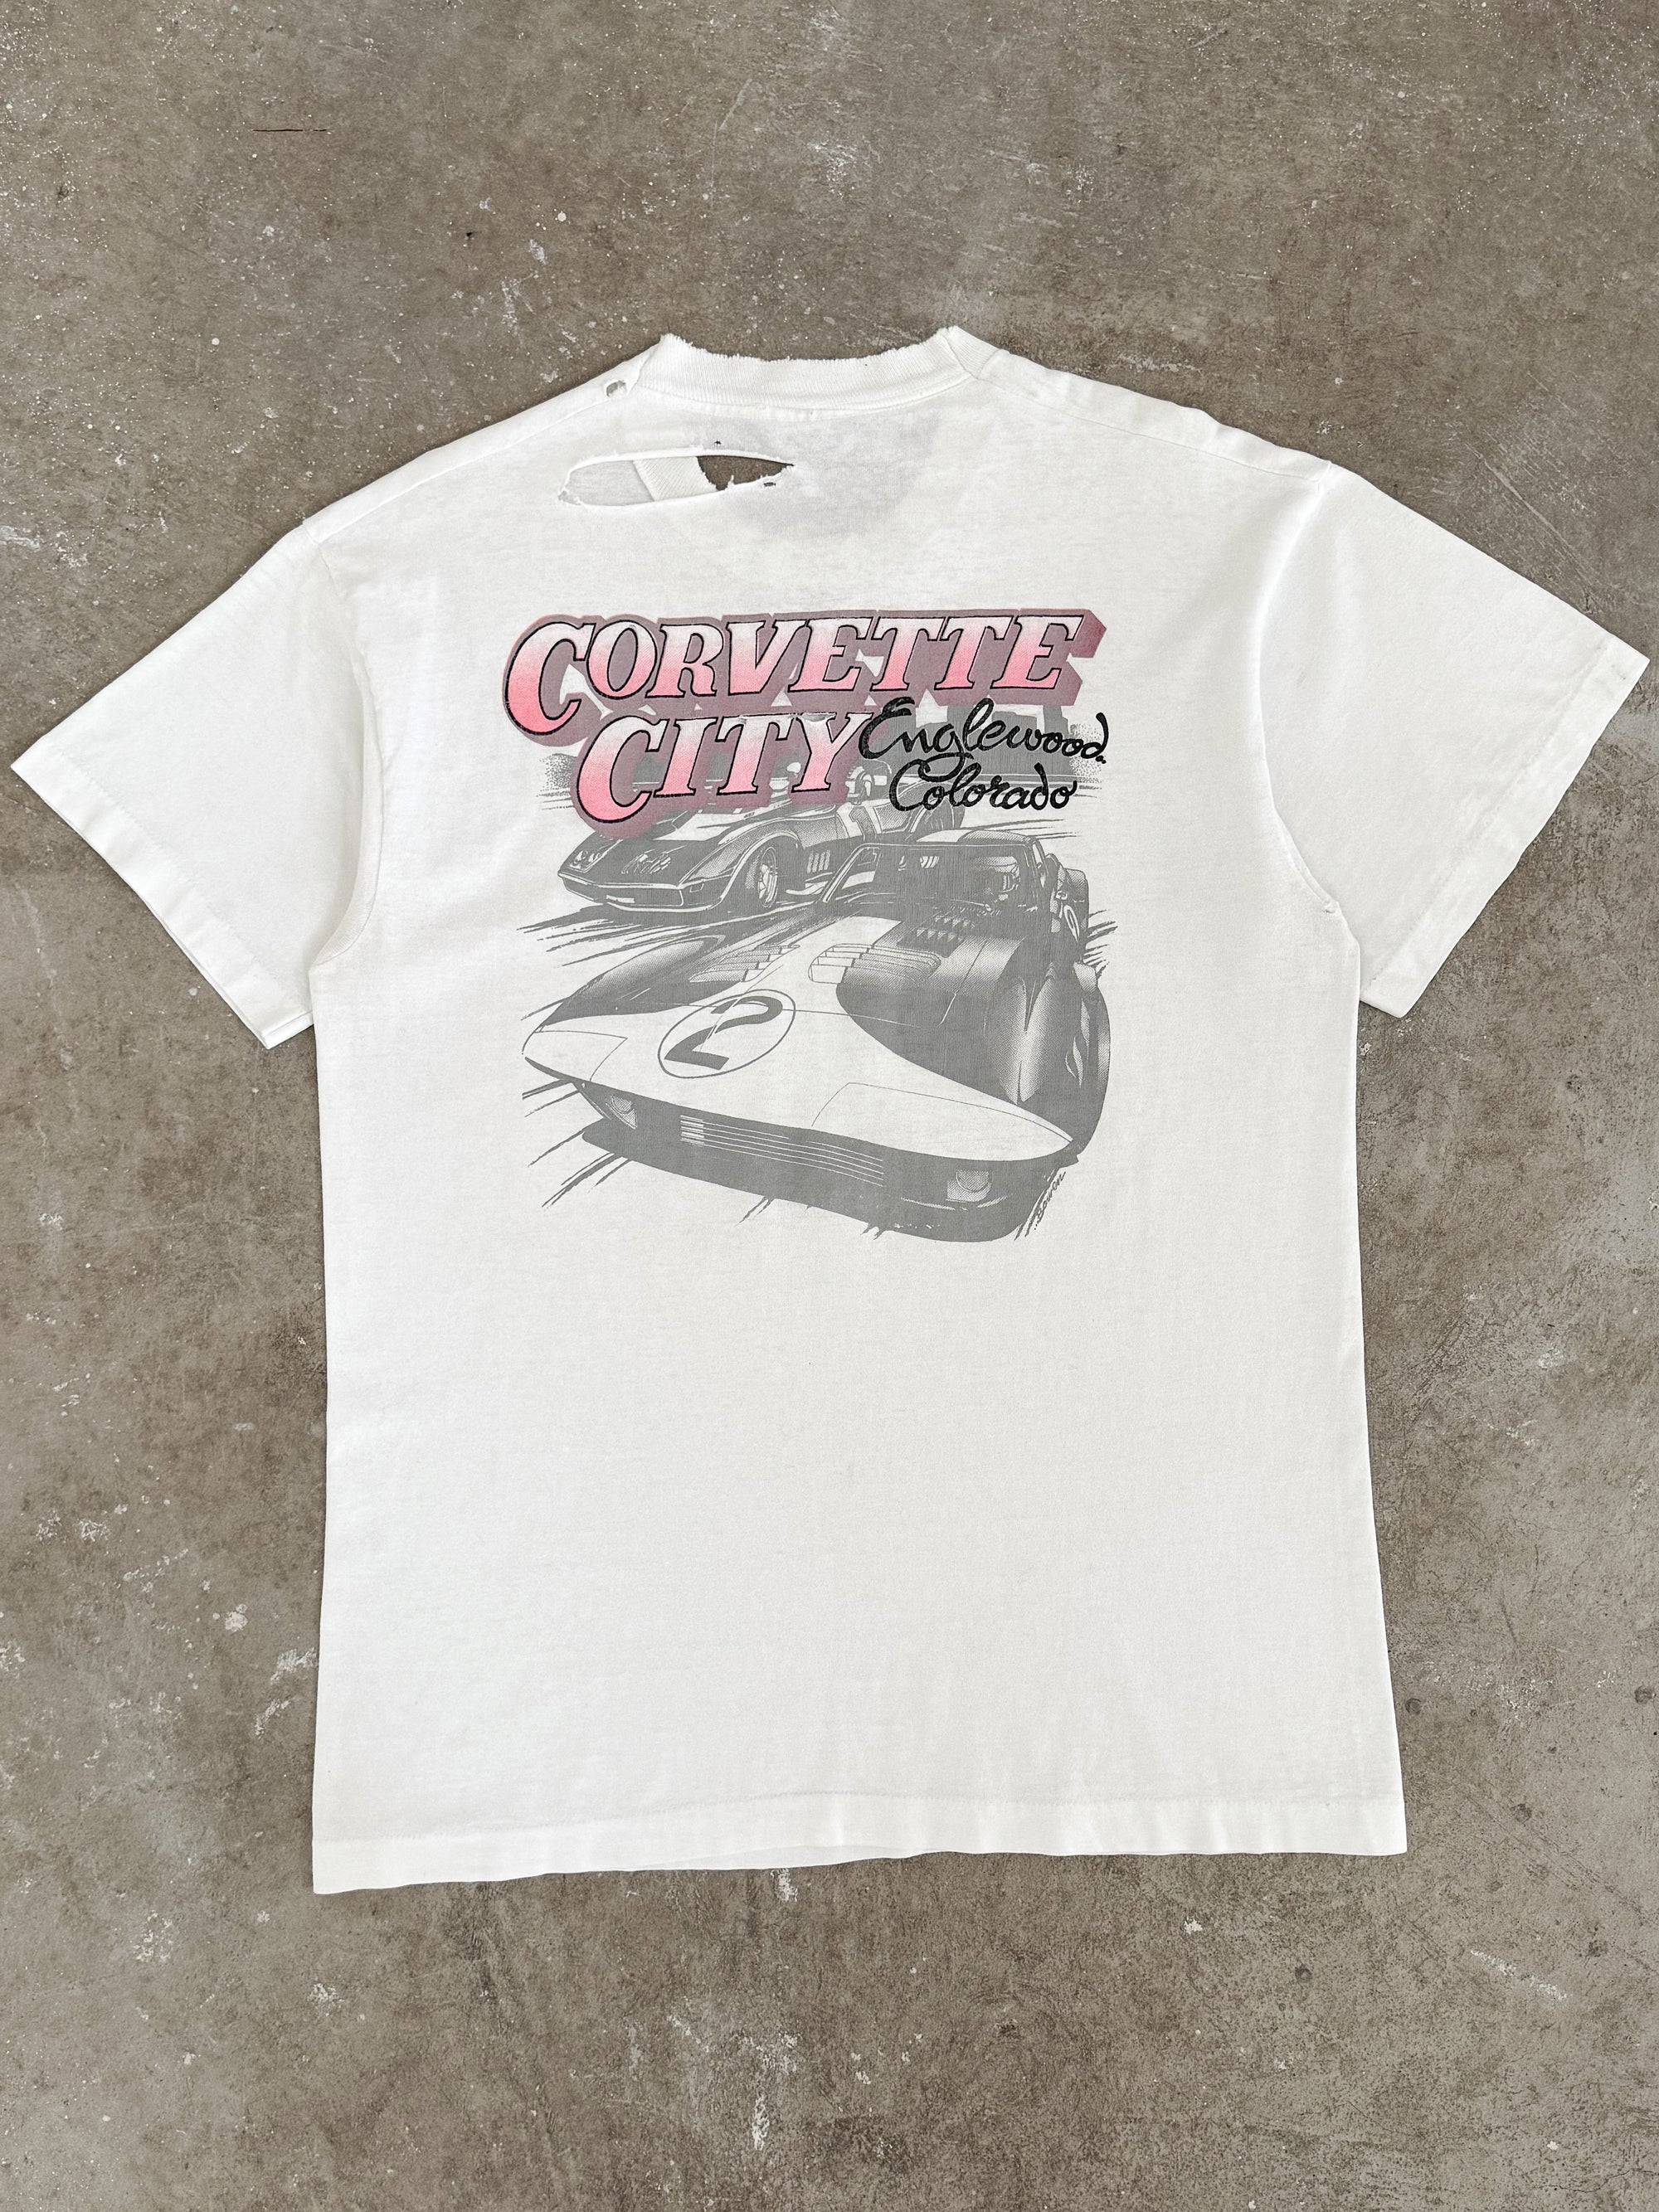 1990s "Corvette City" Distressed Tee (M)